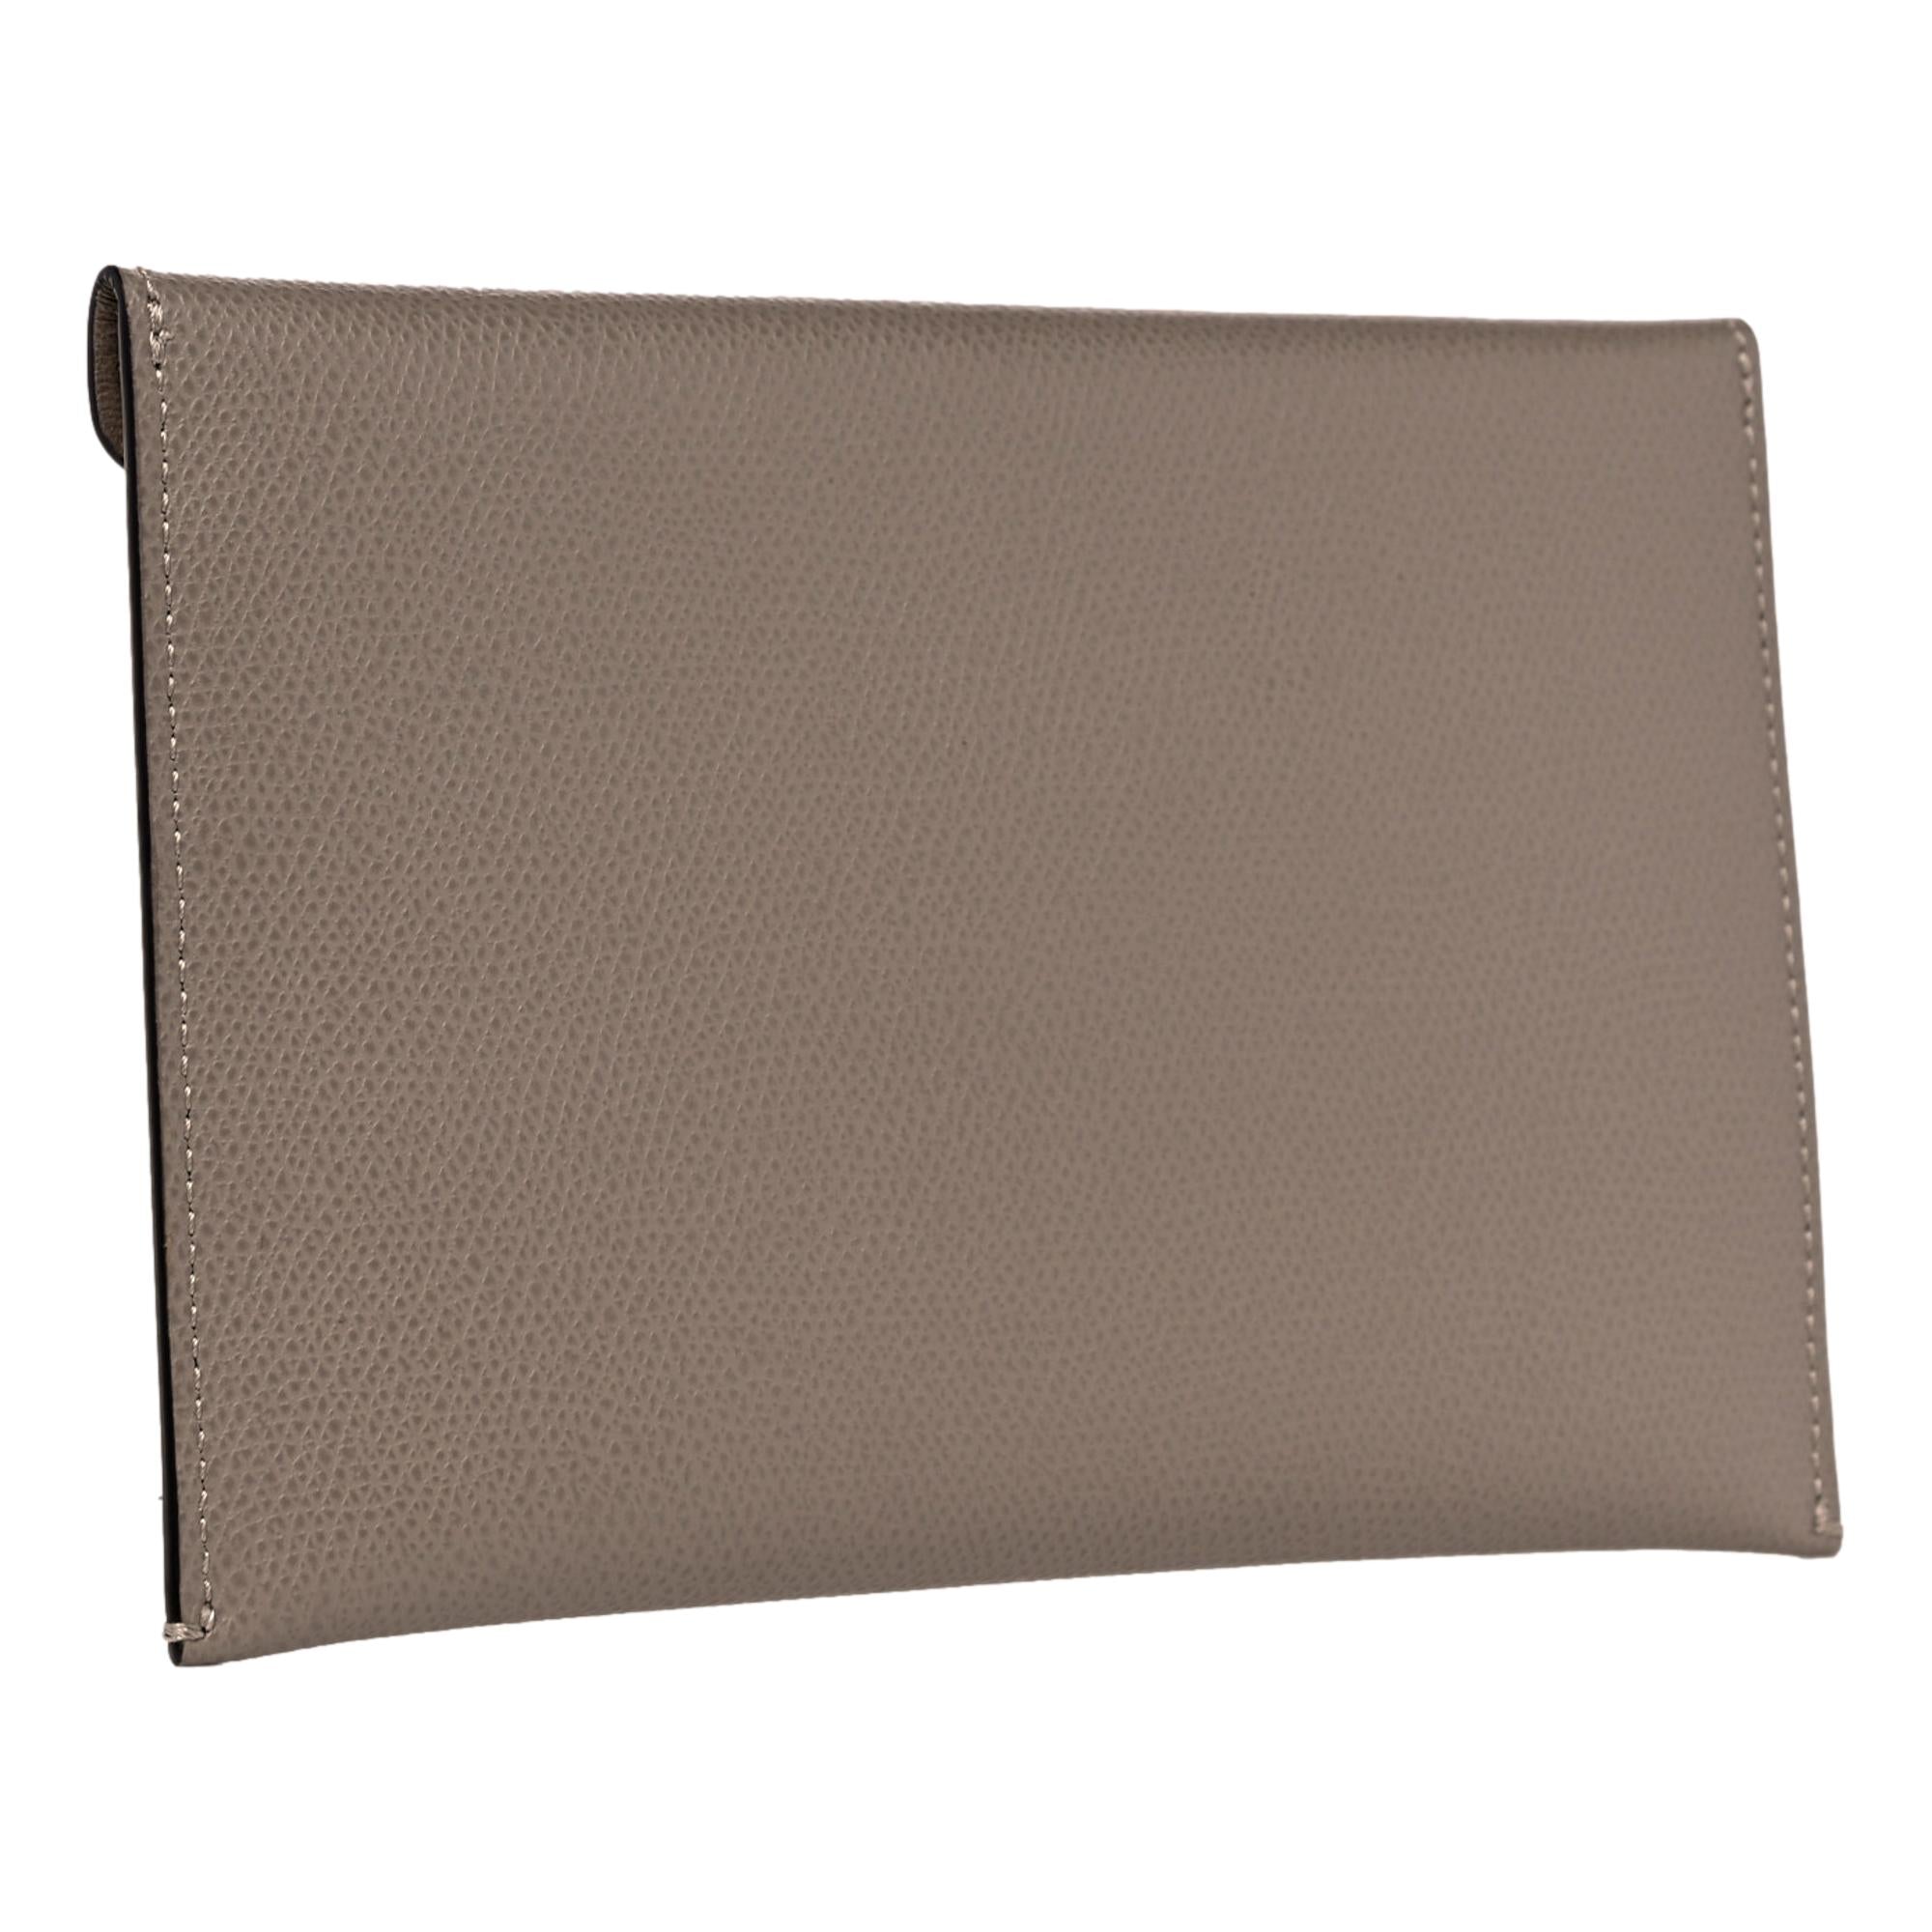 Fendi F is Fendi Gray Pebbled Leather Flat Pouch Clutch Bag